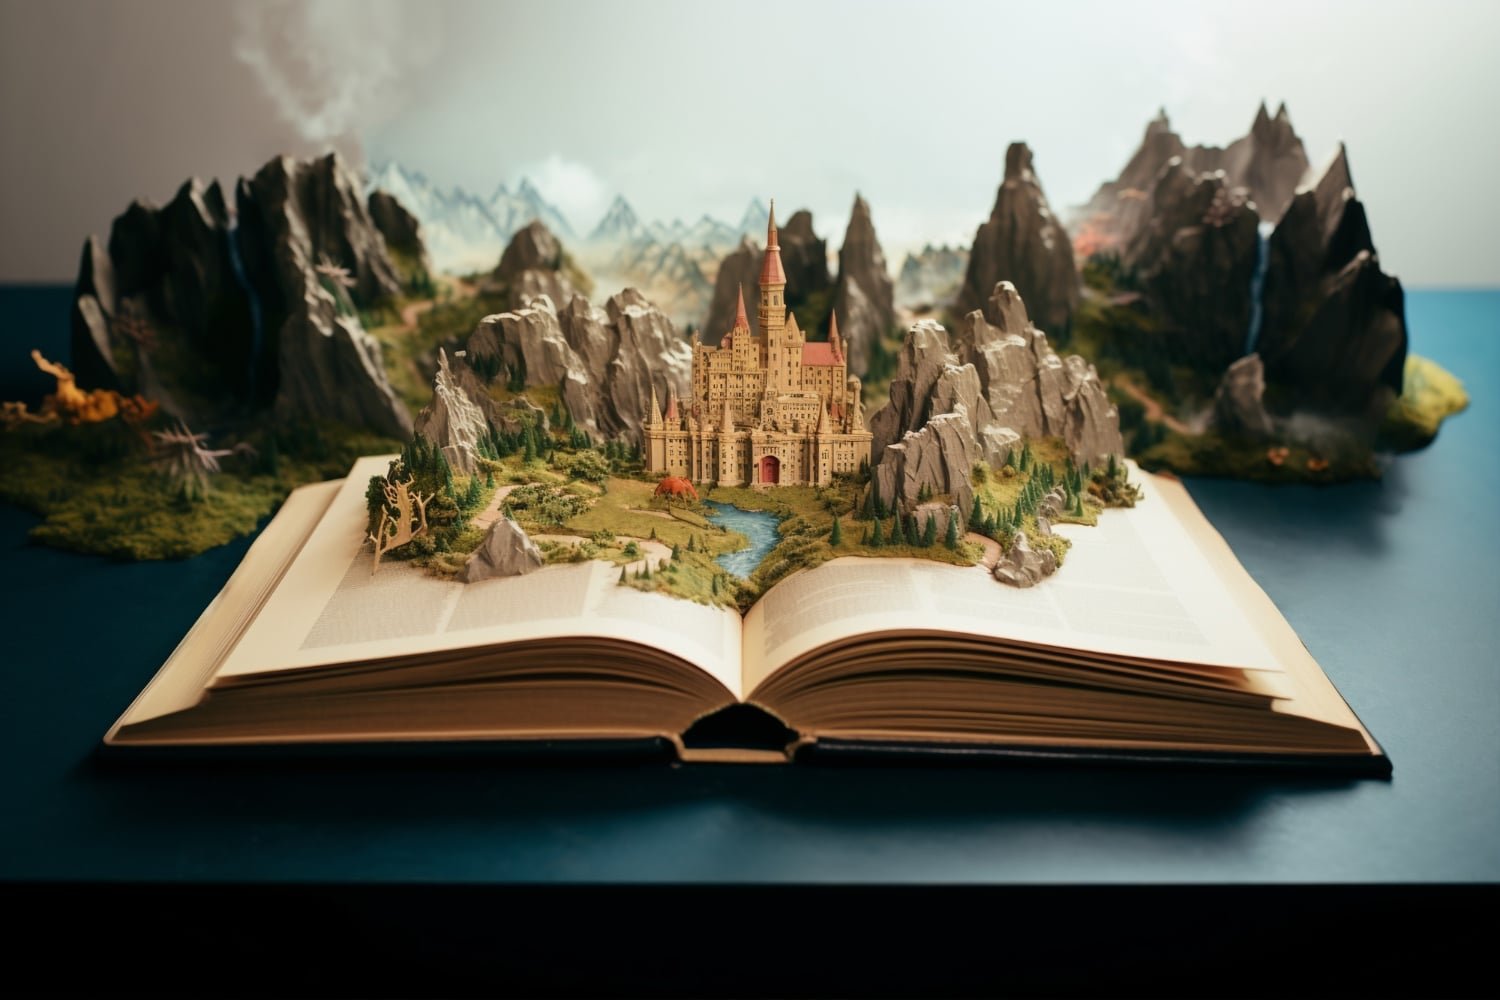 TASCHEN: Exploring the World Through Beautiful Books